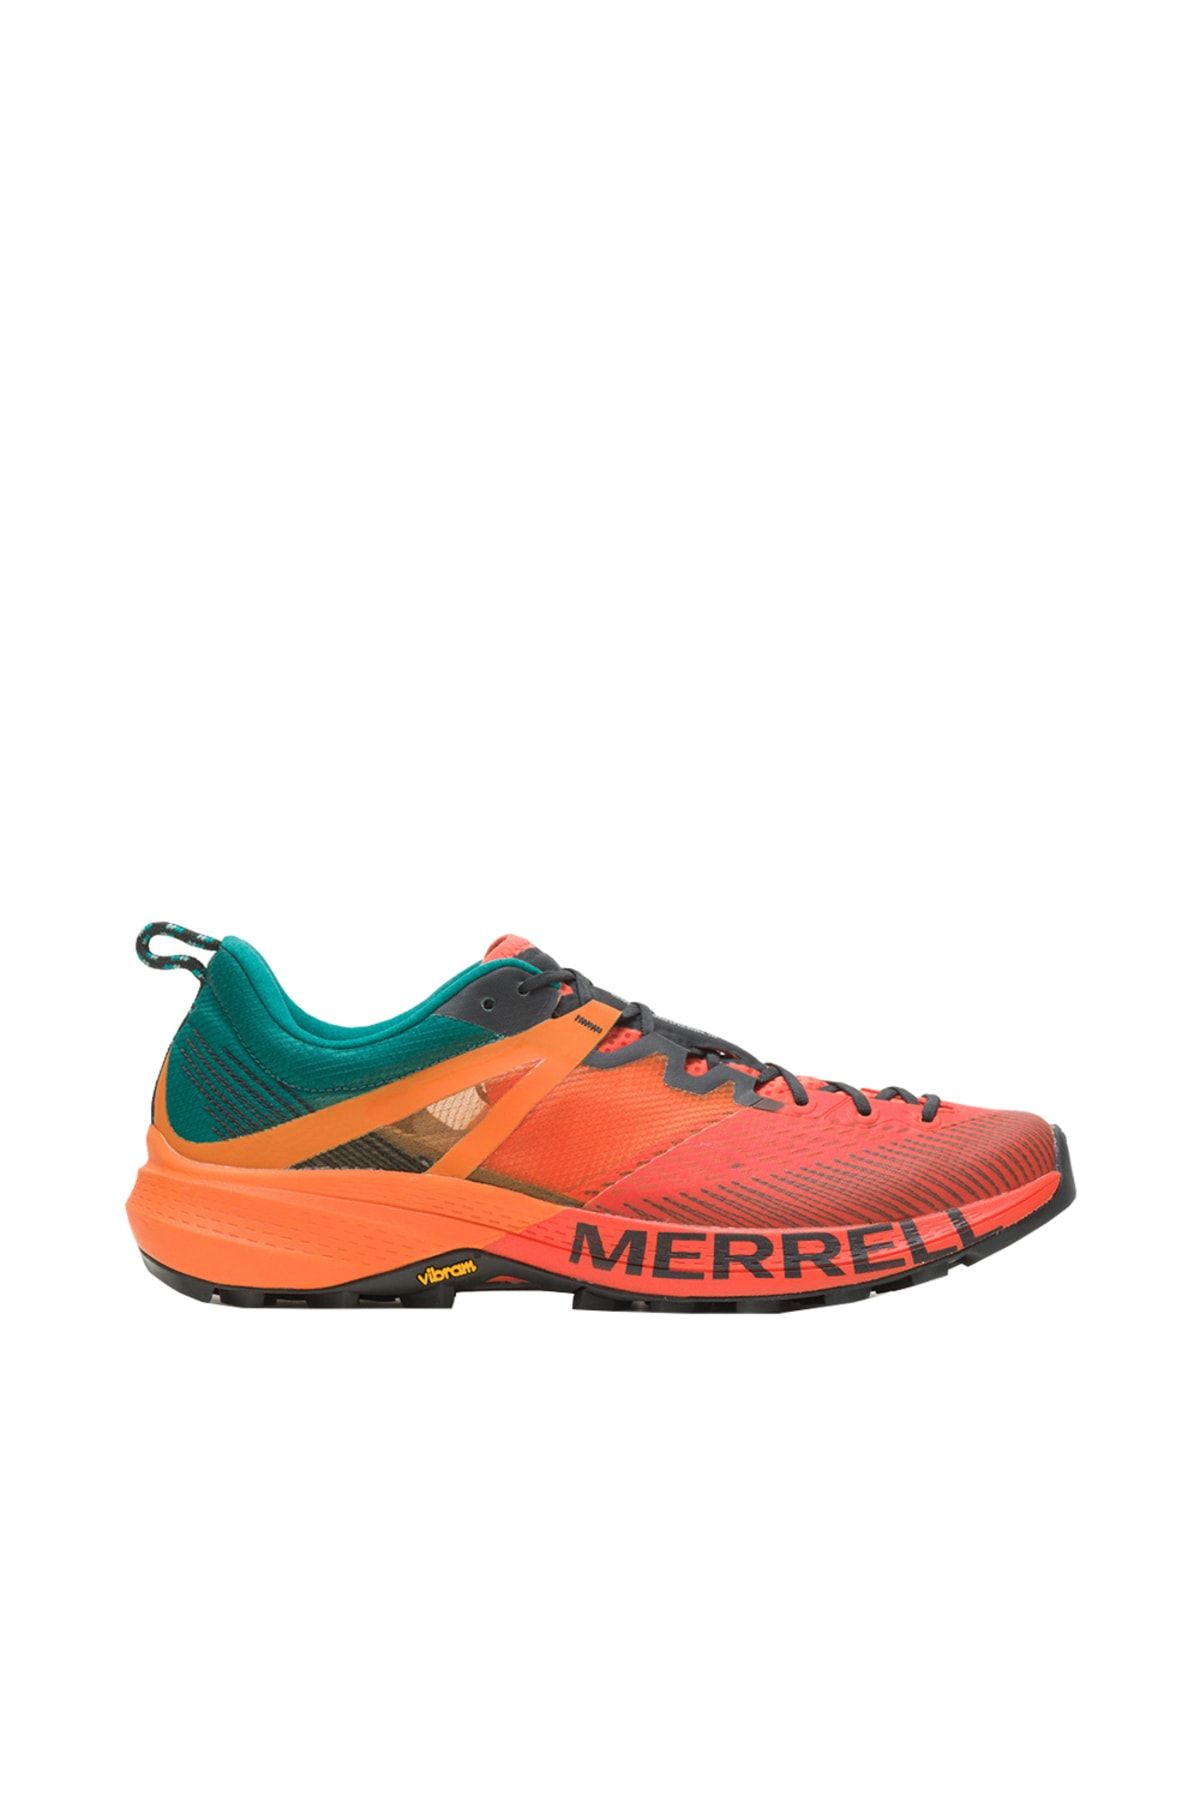 Merrell Mtl Mqm Patika Erkek Koşu Ayakkabısı